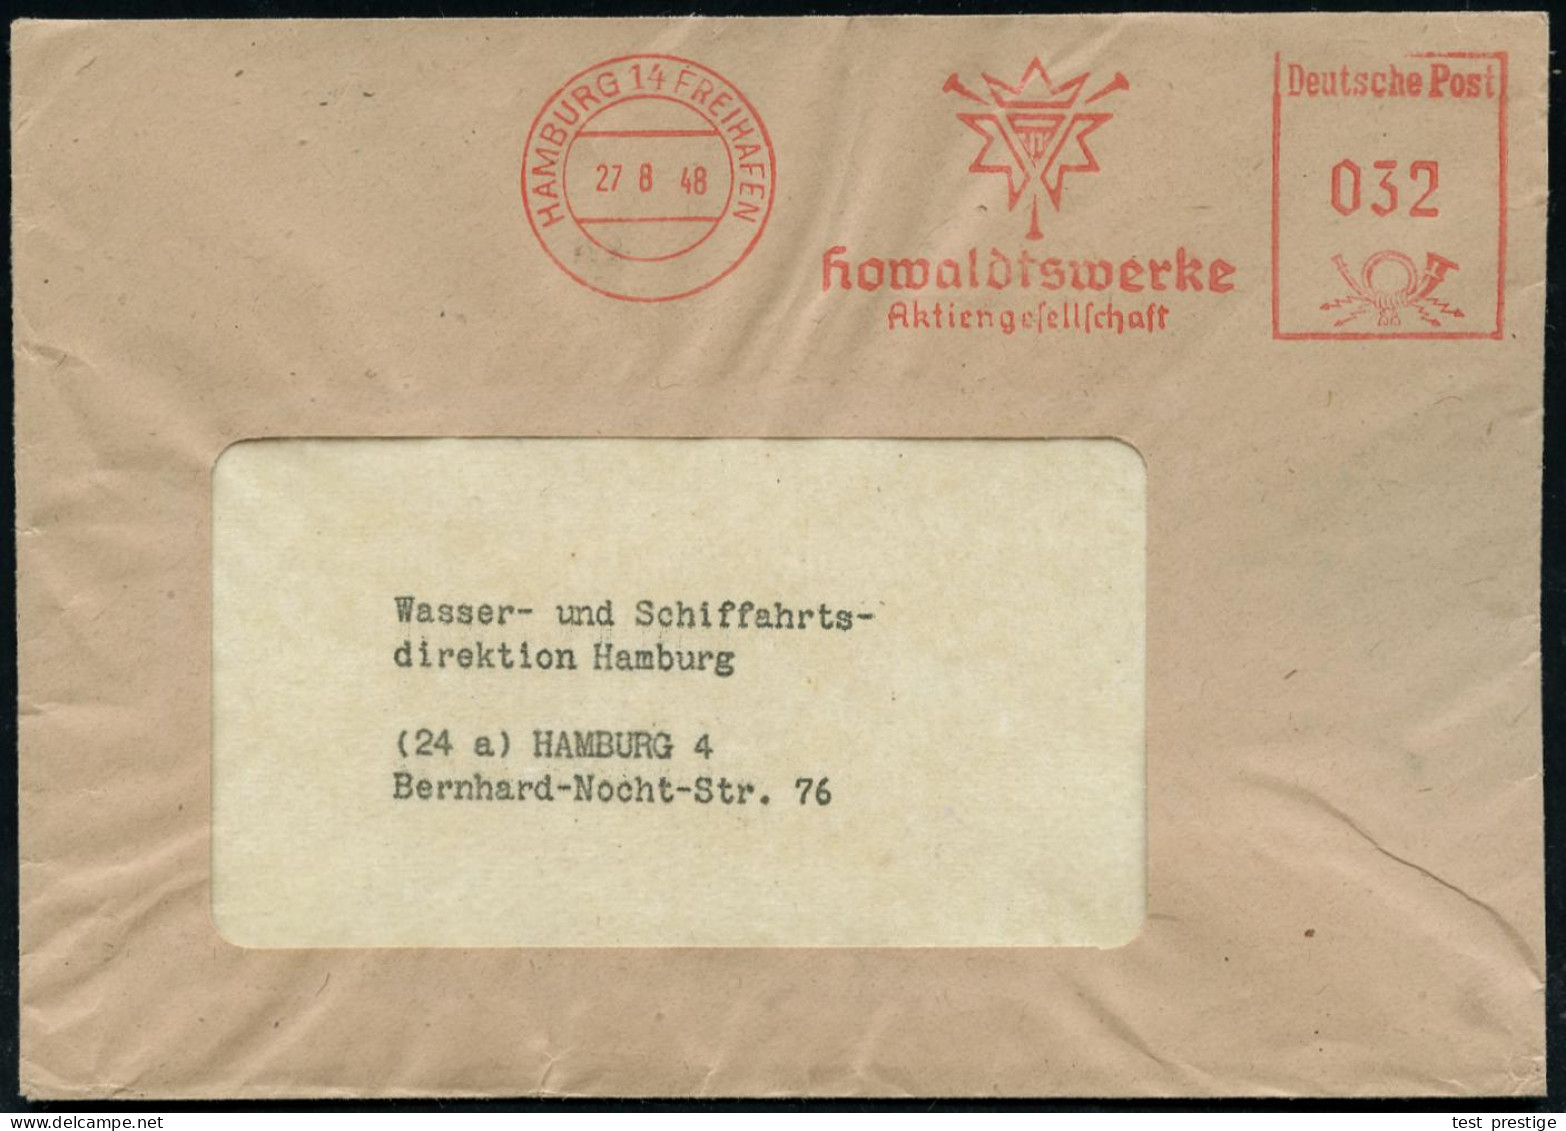 HAMBURG 14  F R E I H A F E N /  Howaldtswerke/ AG 1948 (27.7.) AFS = Hauspostamt Zollausschlußgebiet Hamburger Hafen (F - Maritime